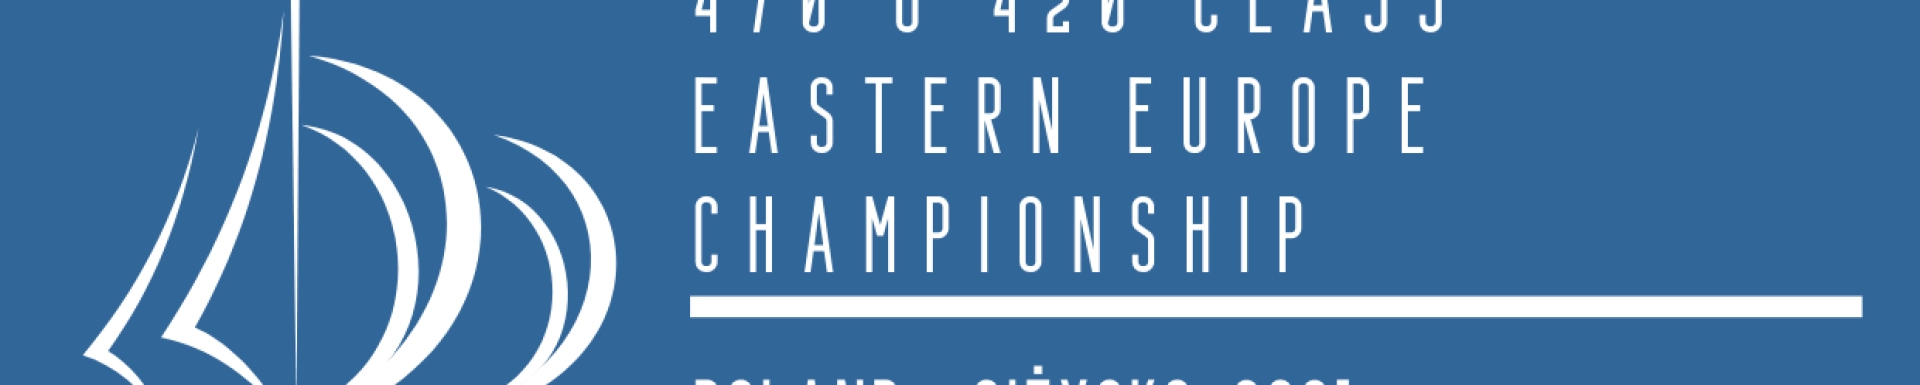 Eastern Europe Championship